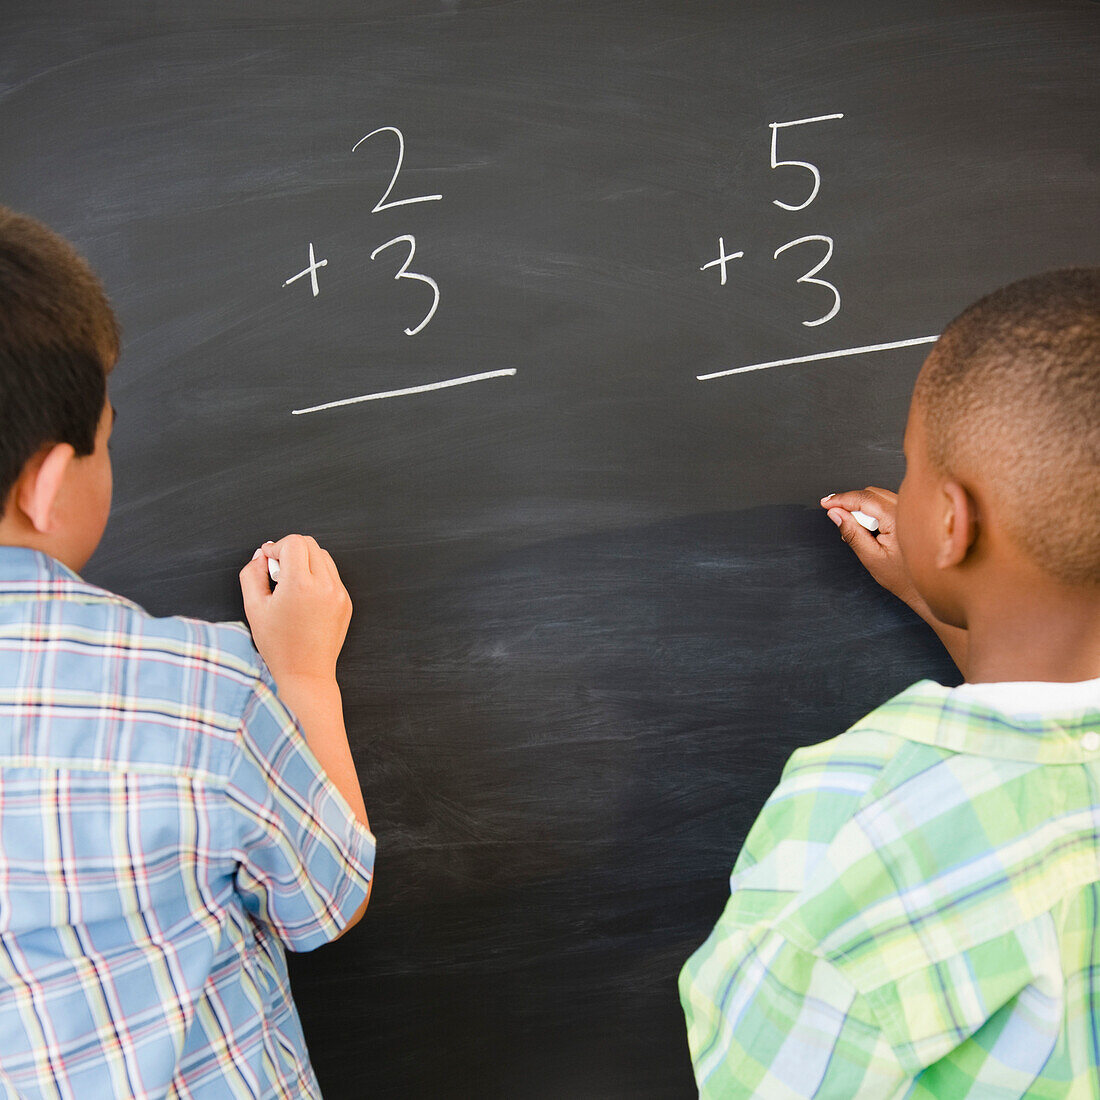 Boys solving math problems on blackboard, Jersey City, New Jersey, USA